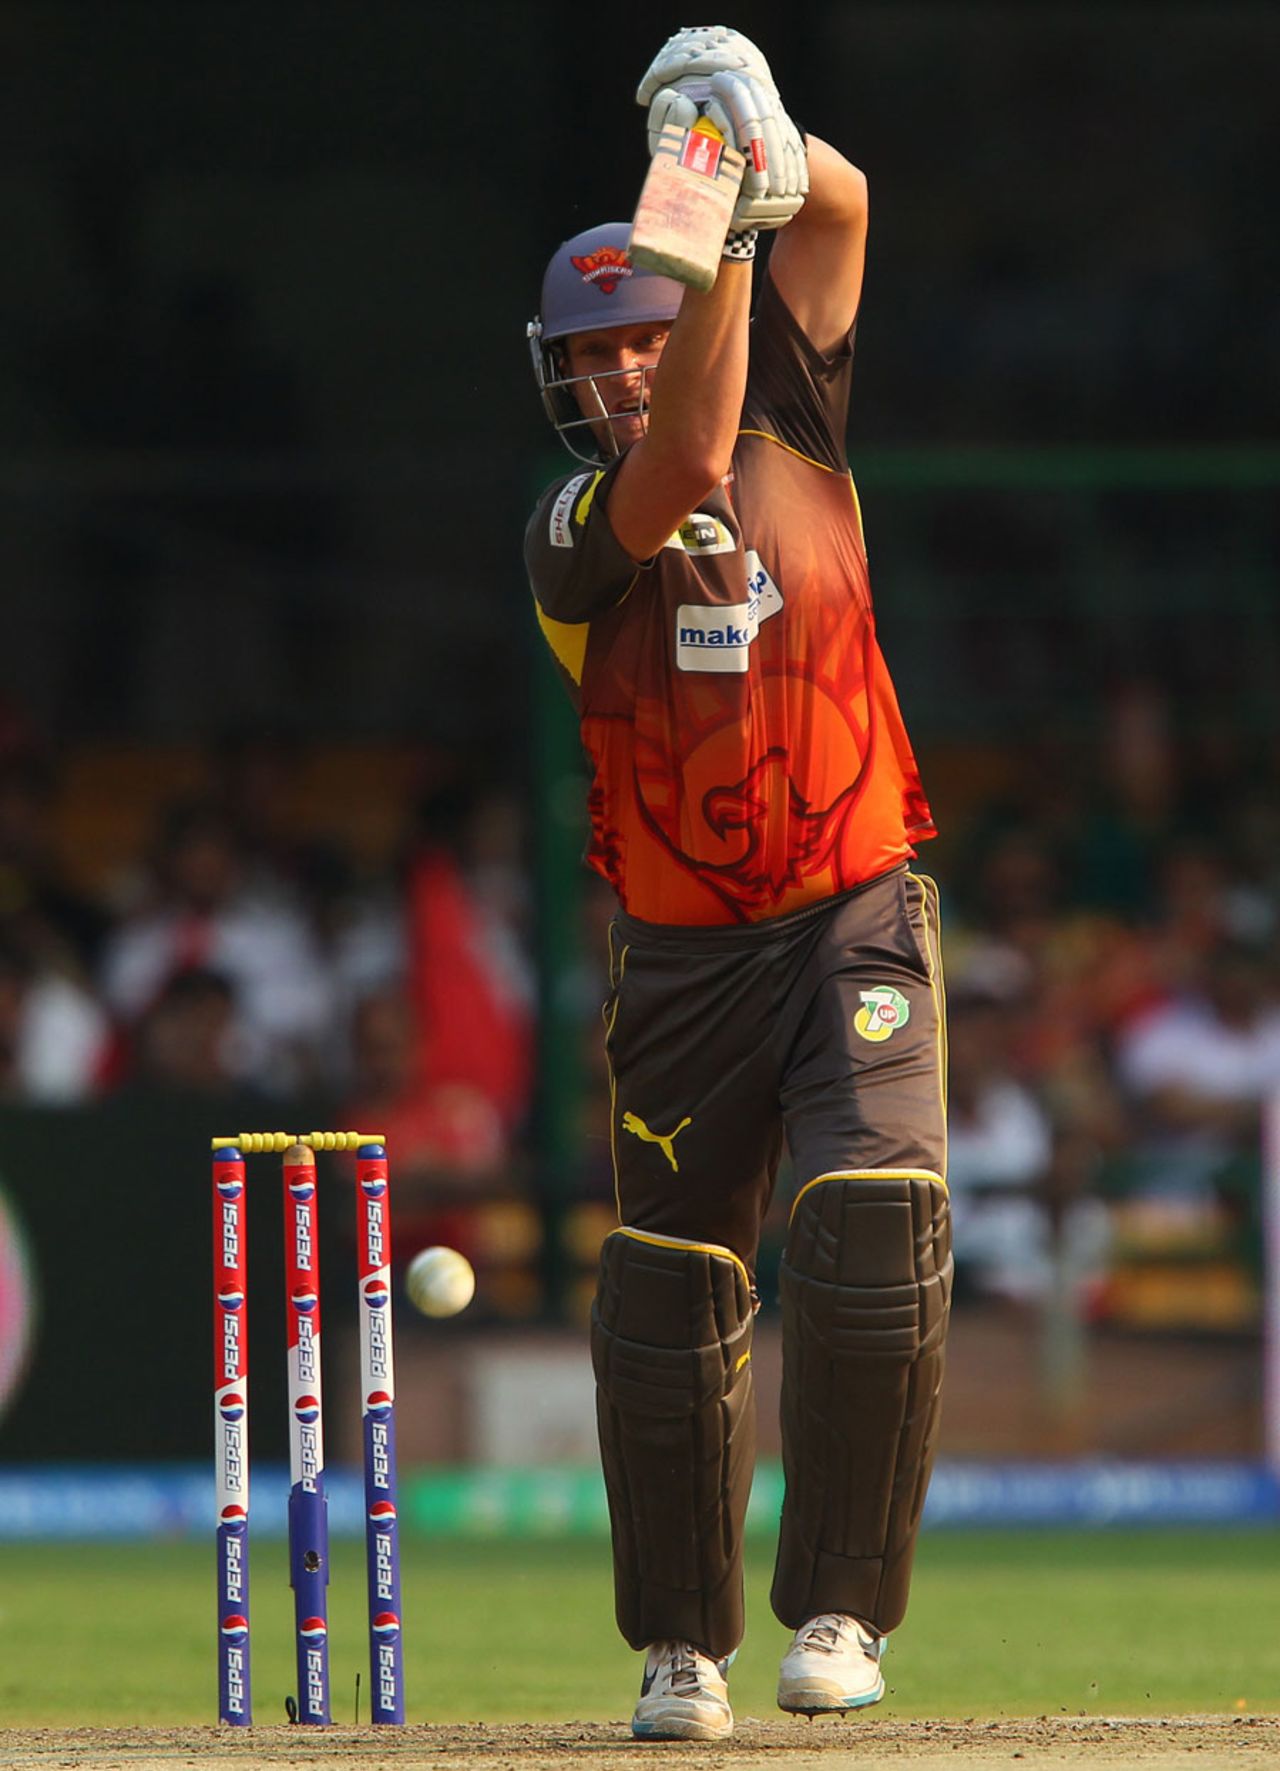 Cameron White plays down the ground, Royal Challengers Bangalore v Sunrisers Hyderabad, IPL, Bangalore, April 9, 2013